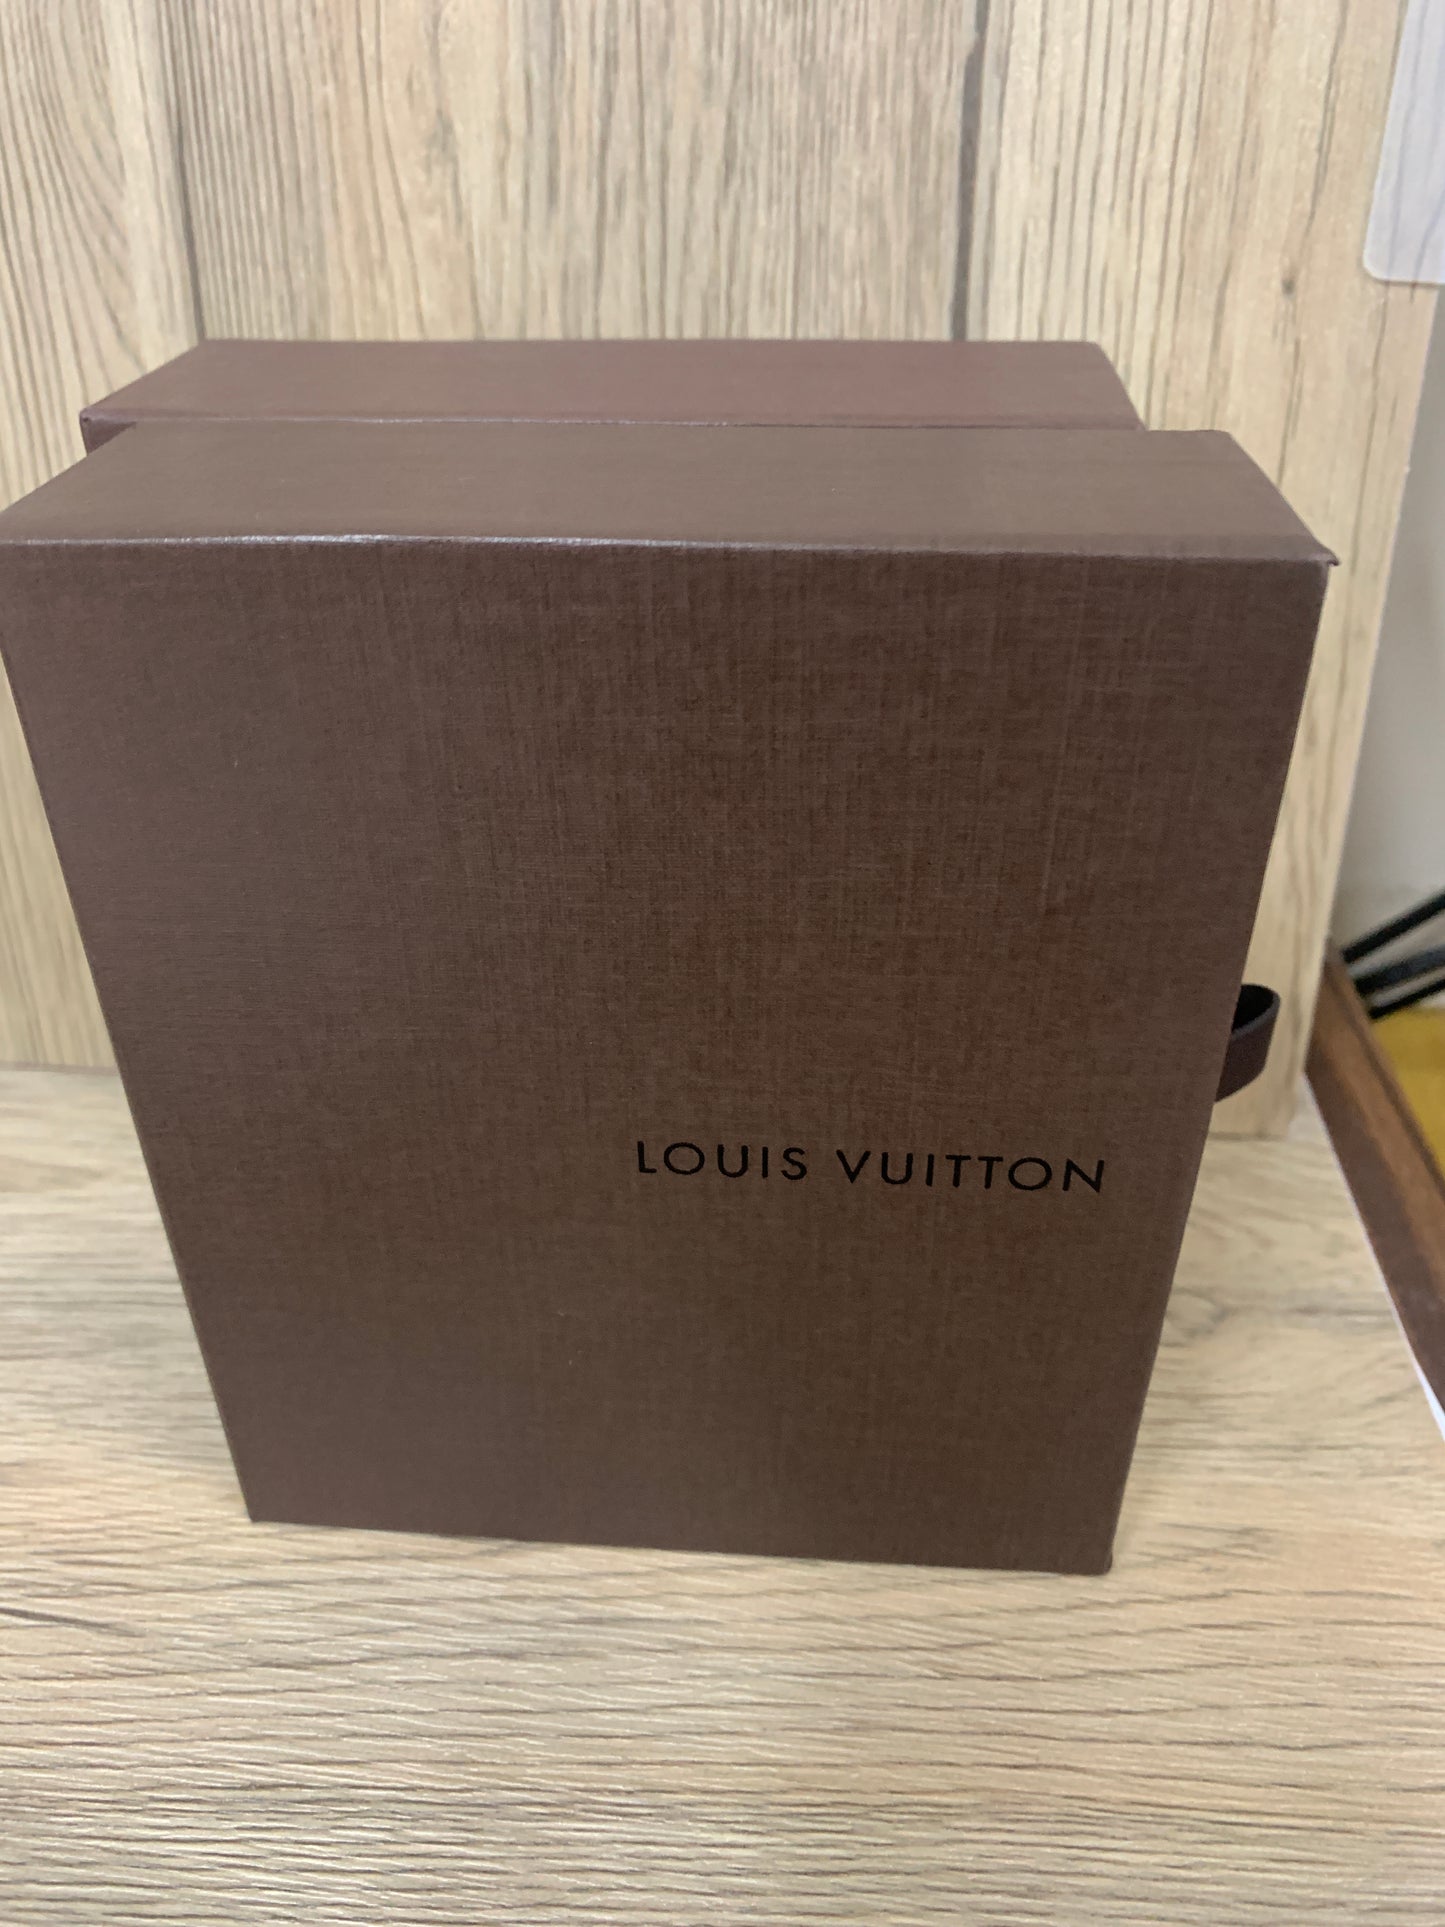 Louis Vuitton, Bags, Louis Vuitton Gift Box Huge Extra Large Size